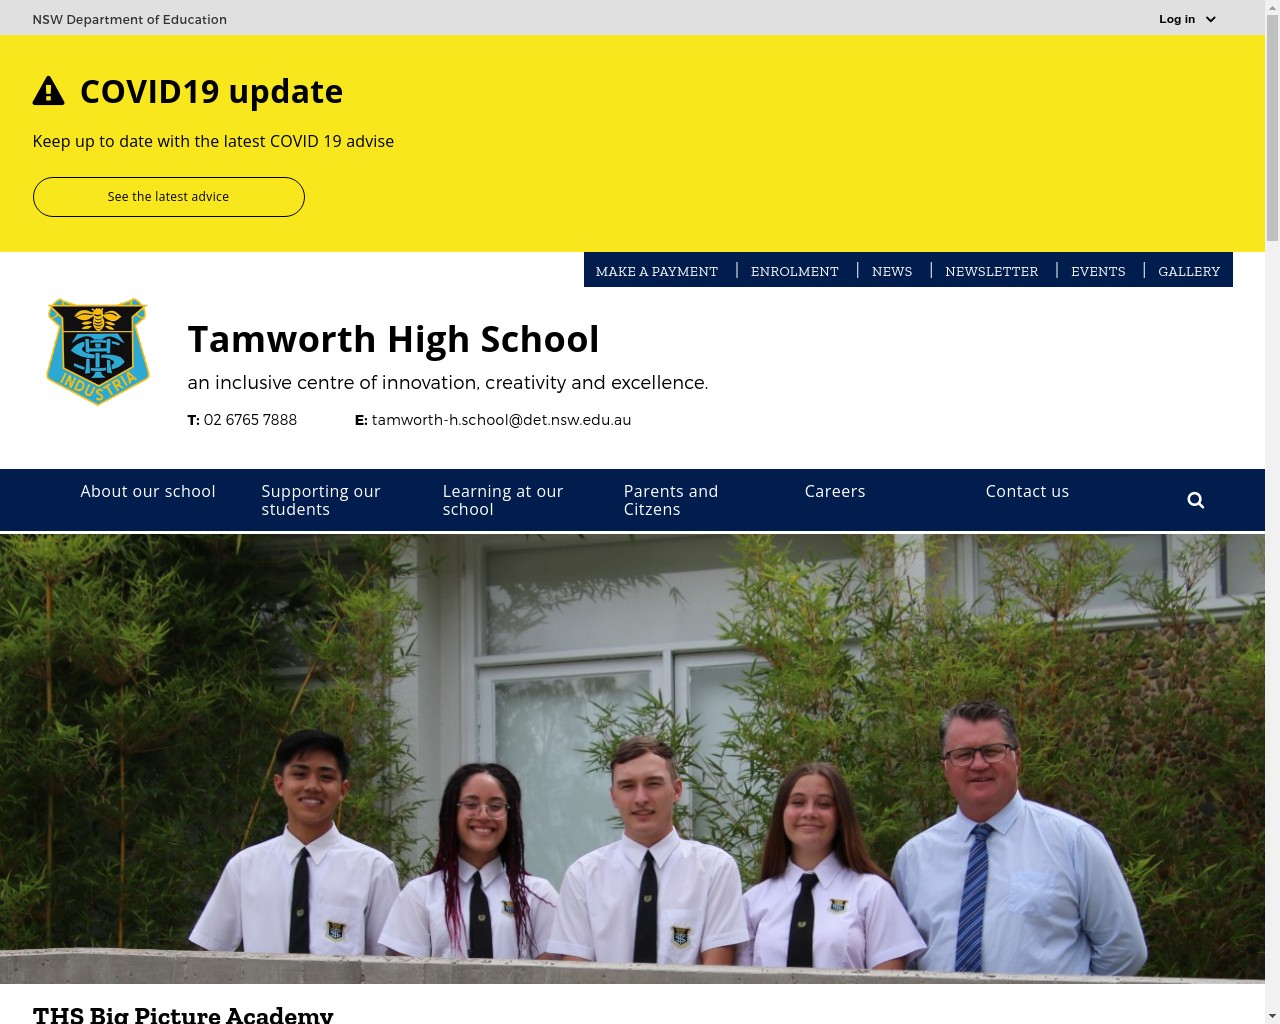 Tamworth High School